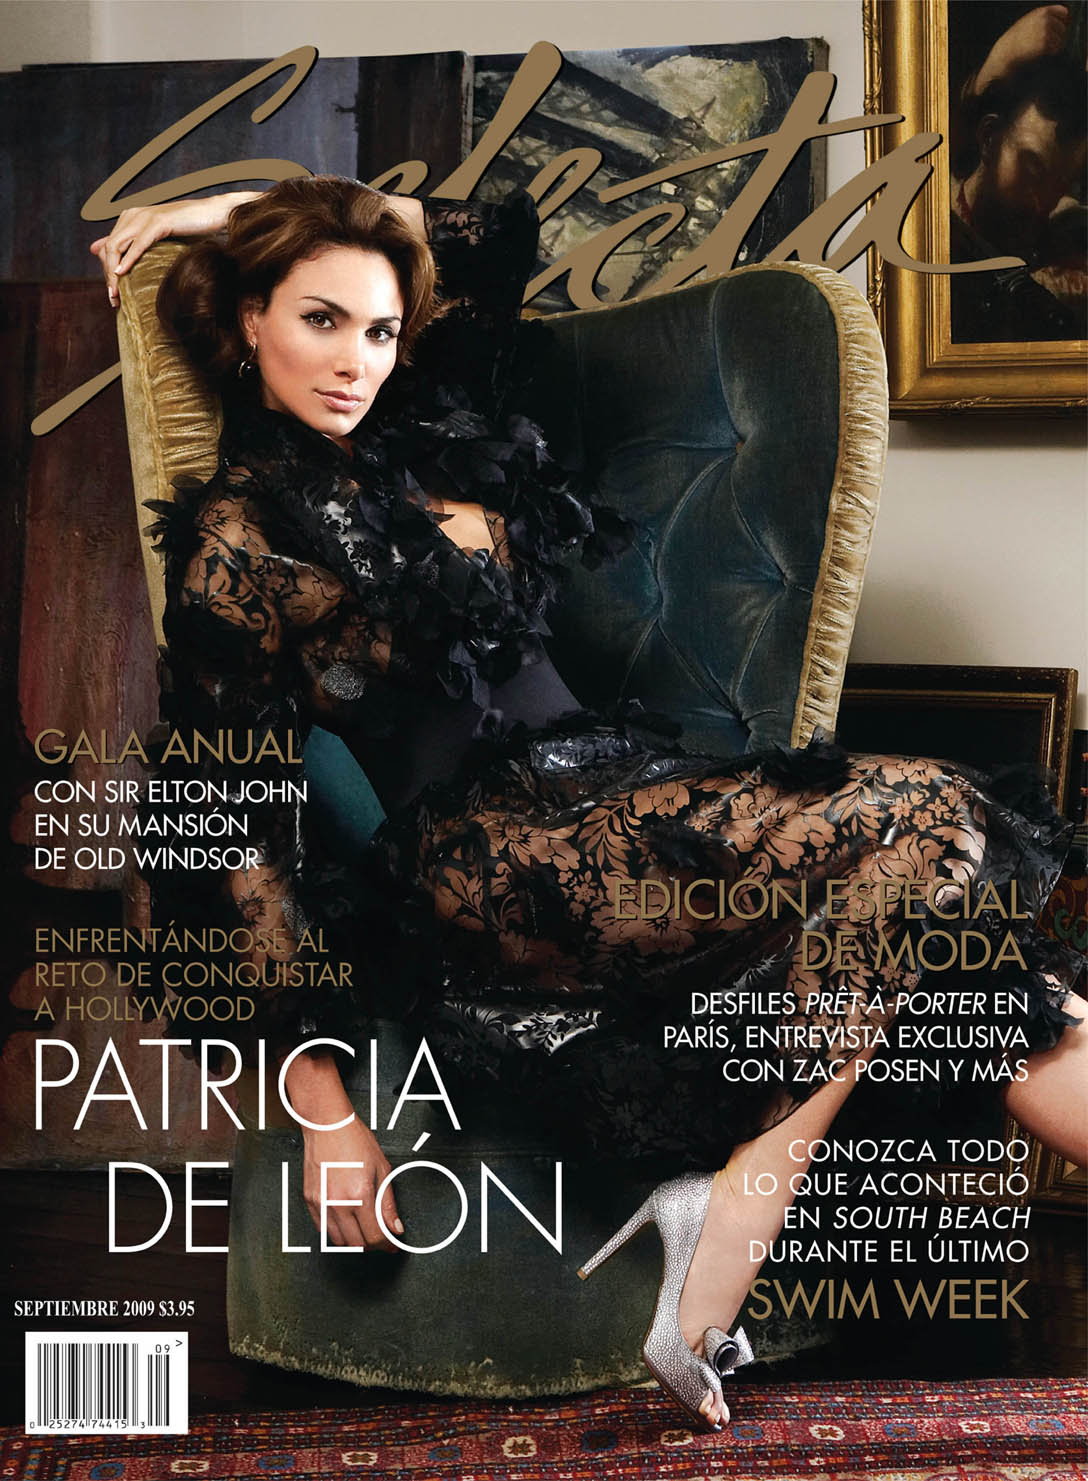 September 2009 issue of Revista Selecta.